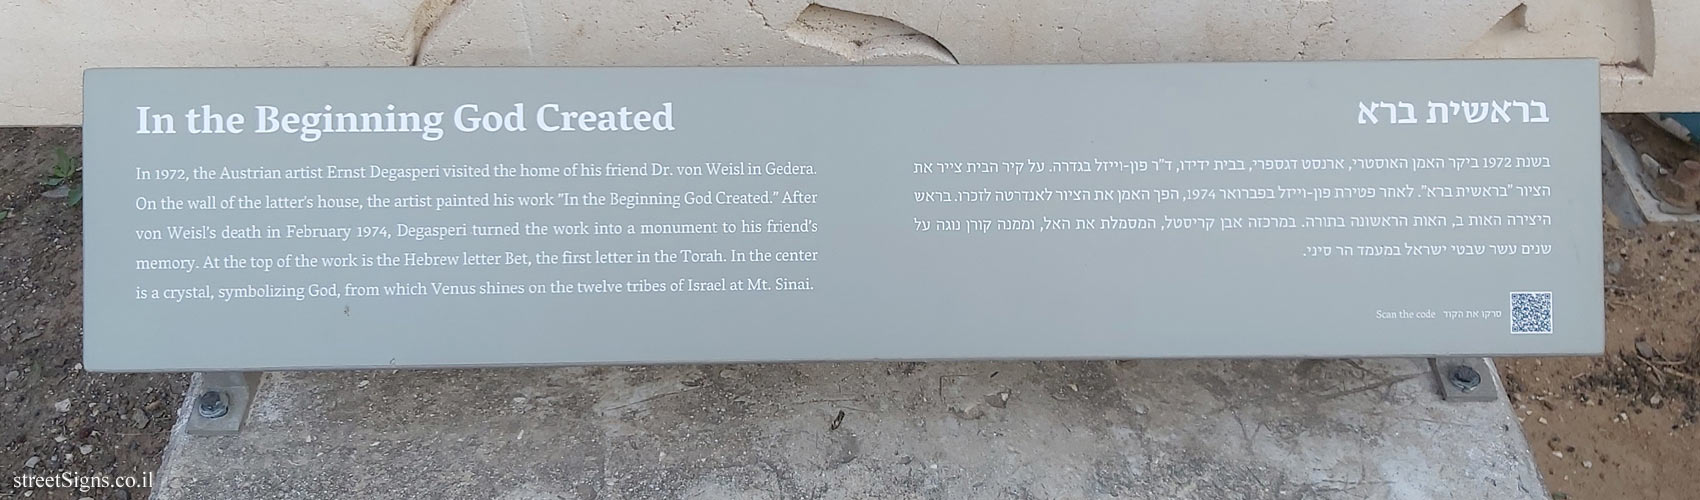 Gedera - In the Beginning God Created - Ernst Degasperi’s outdoor sculpture/monument